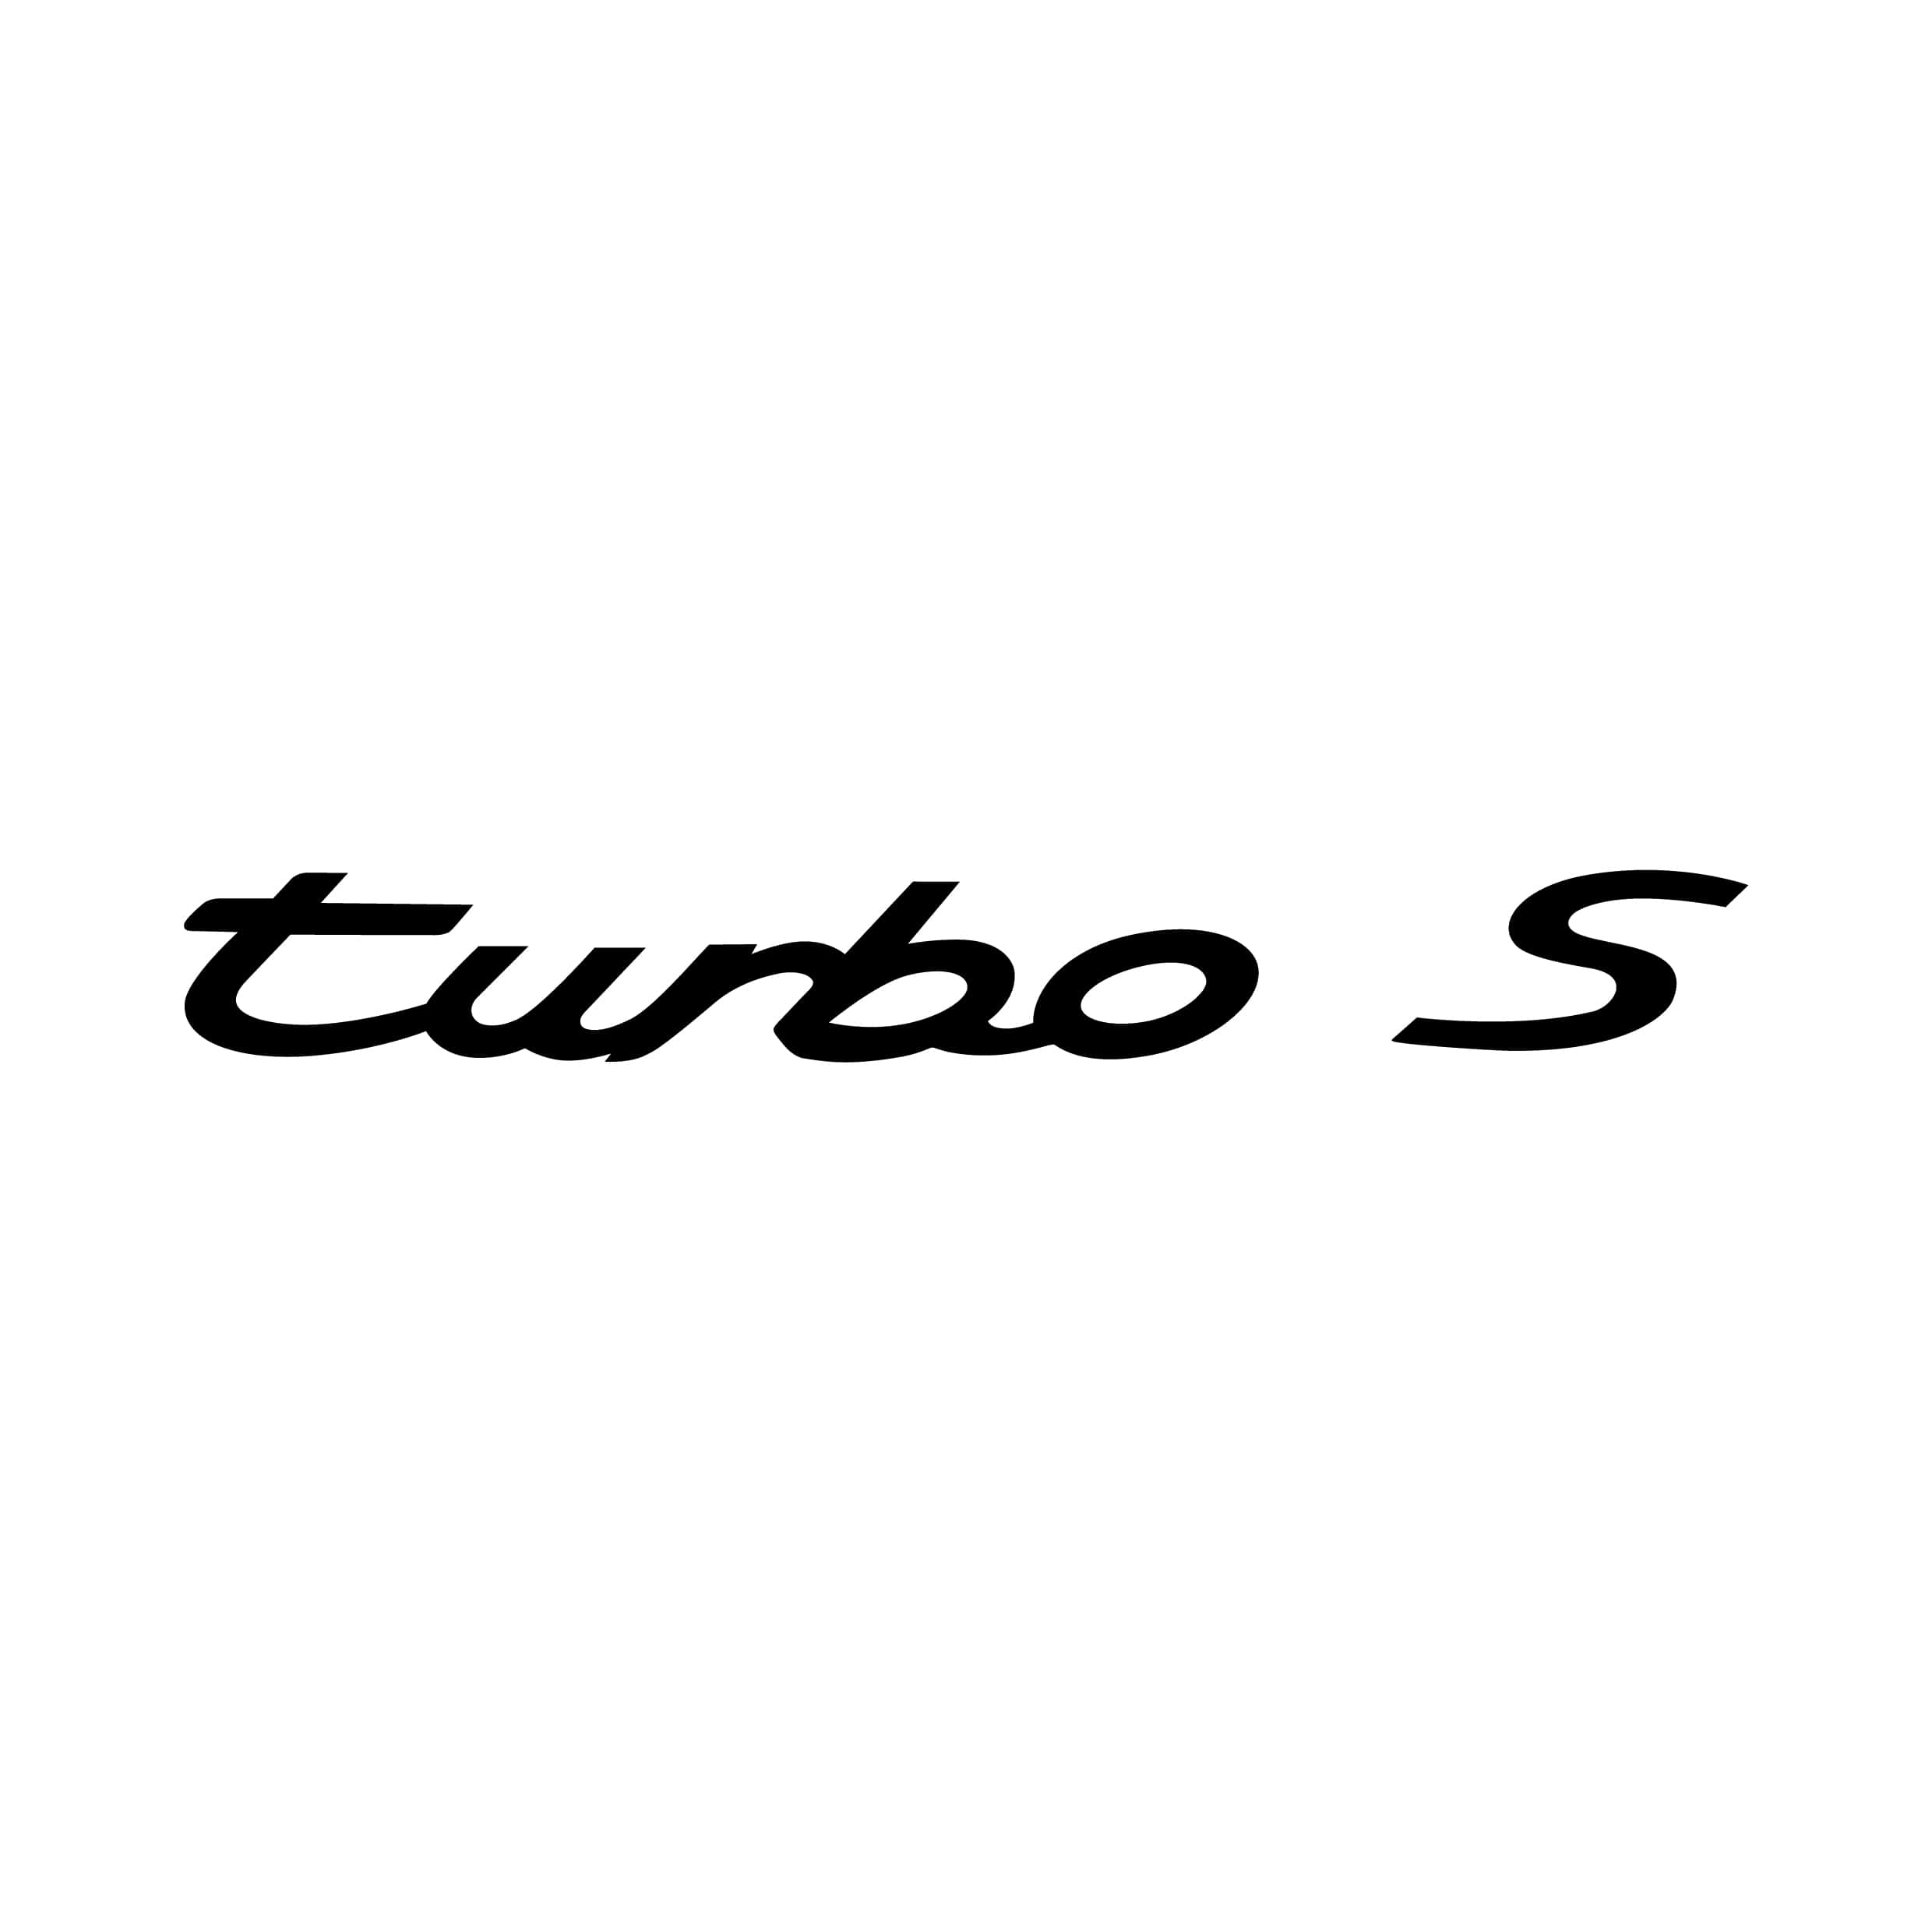 stickers-porsche-turbo-s-ref2-autocollant-voiture-sticker-auto-autocollants-decals-sponsors-racing-tuning-sport-logo-min